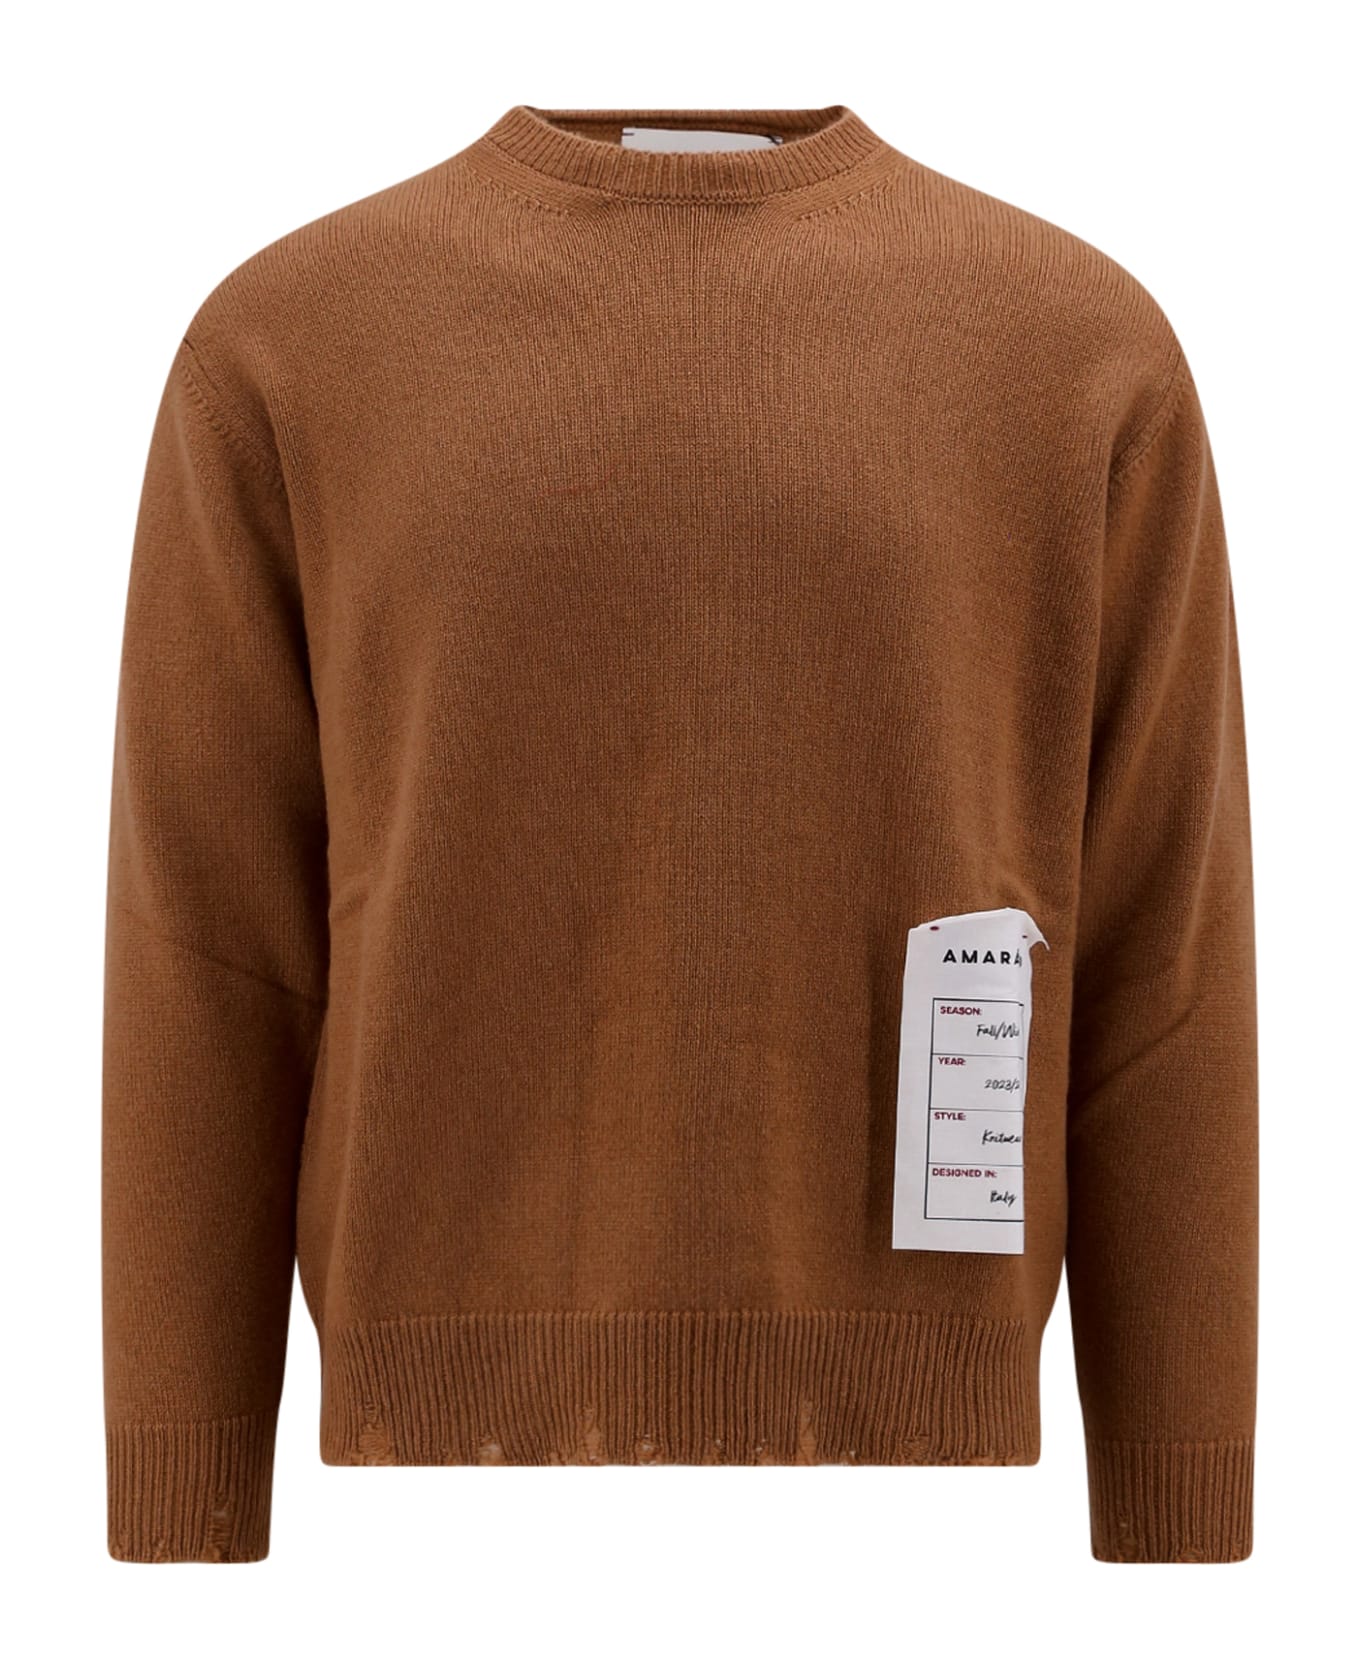 Amaranto Sweater - Brown